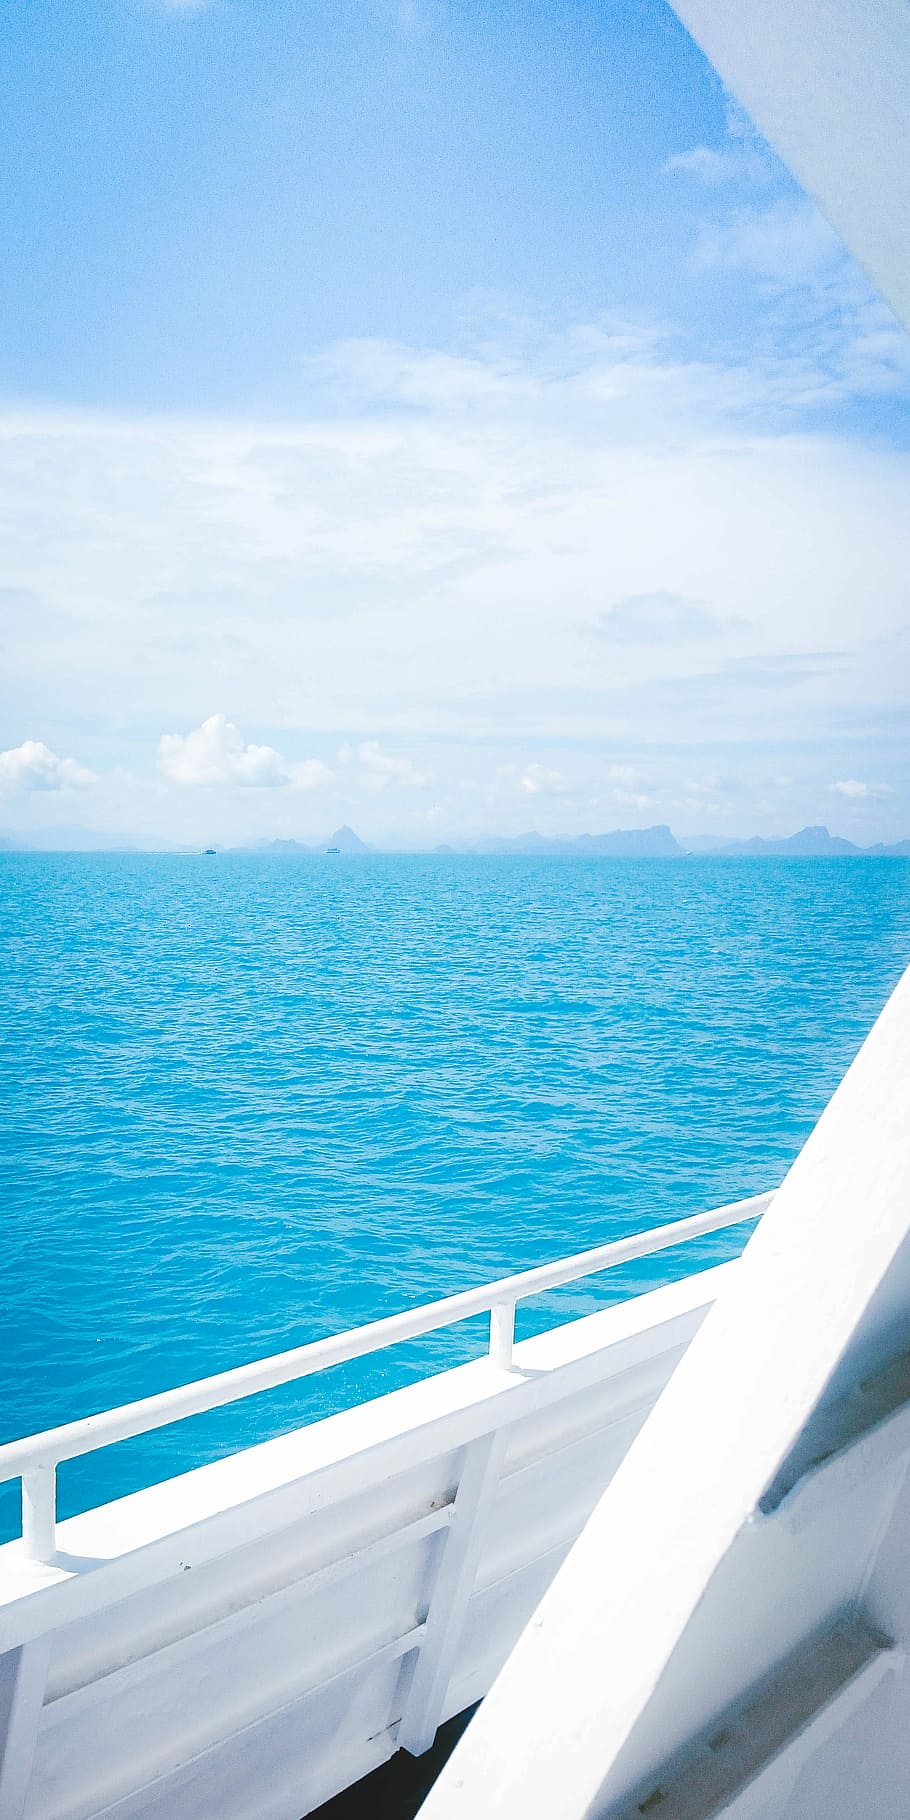 white boat voyaging on ocean during daytime, boat on body of water